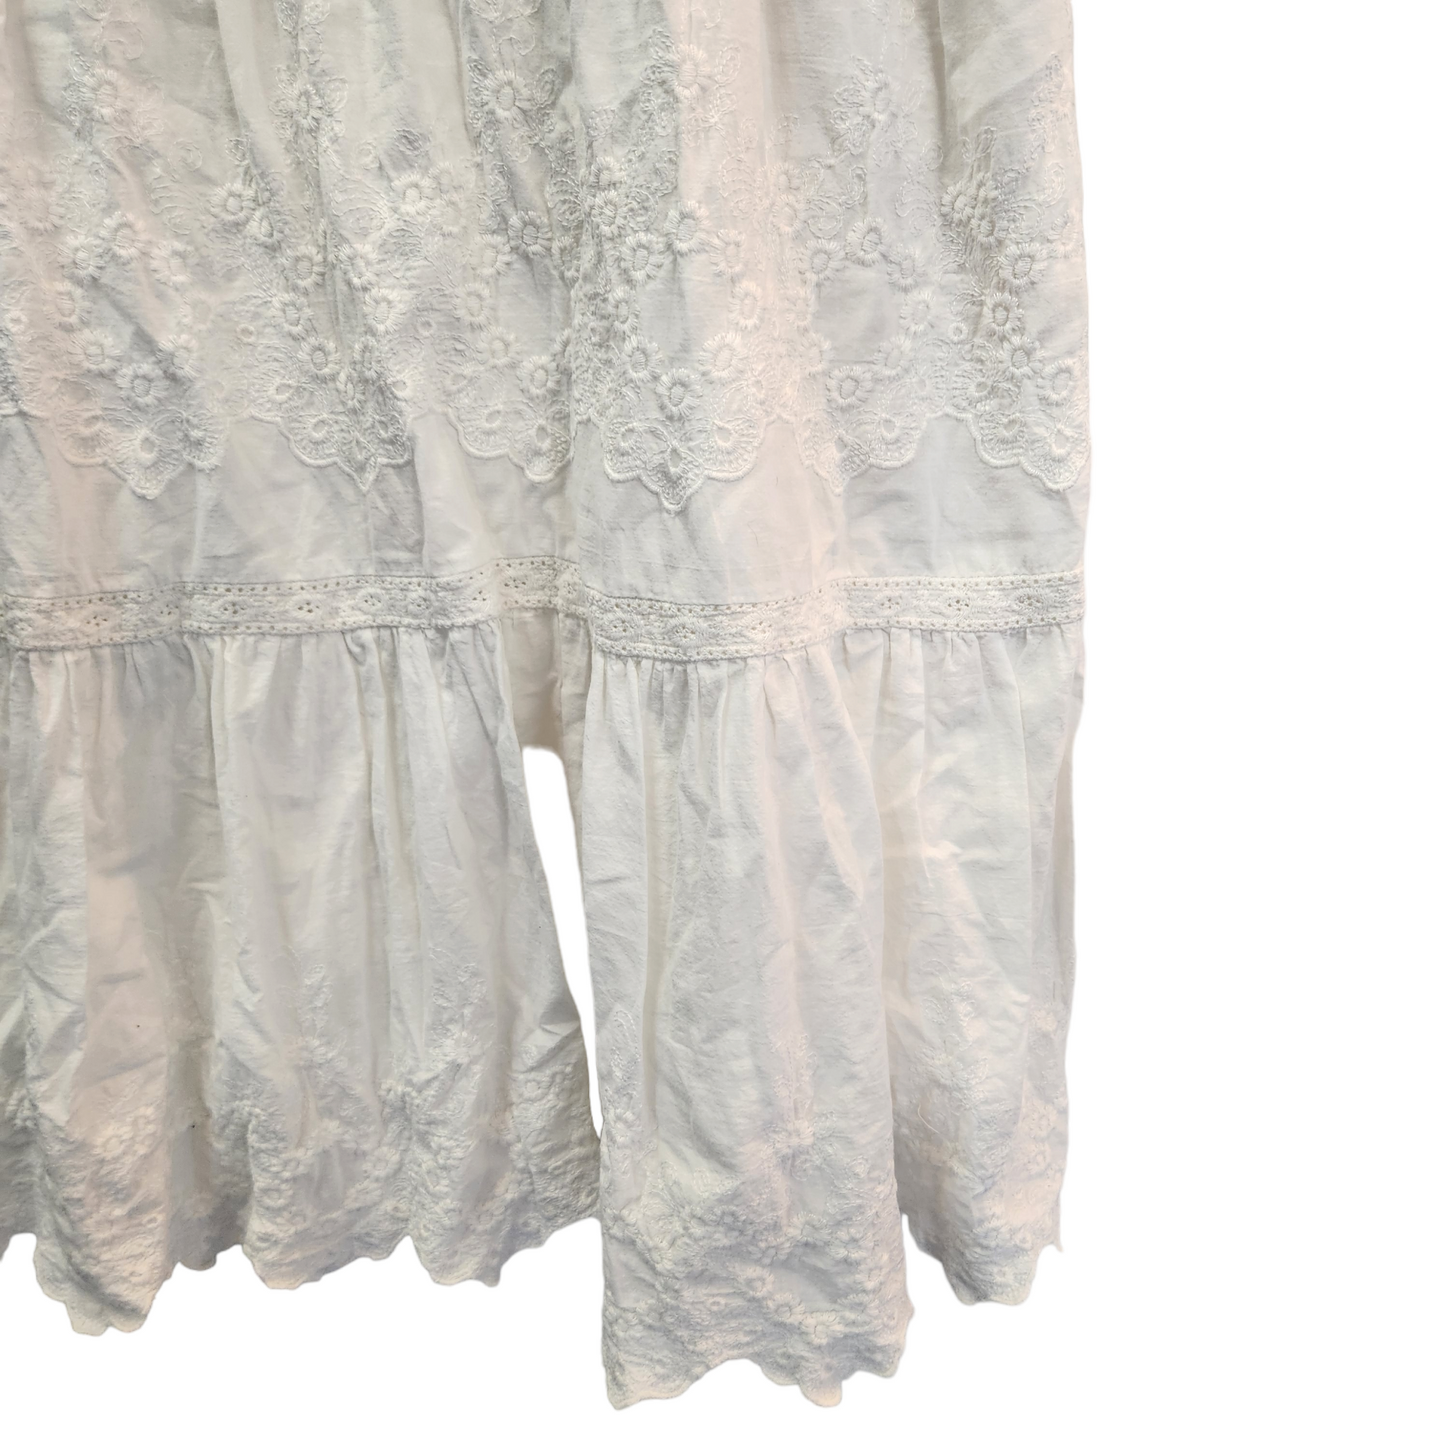 Roper Cotton Eyelet Embroidered Women's Dress White - Size Large